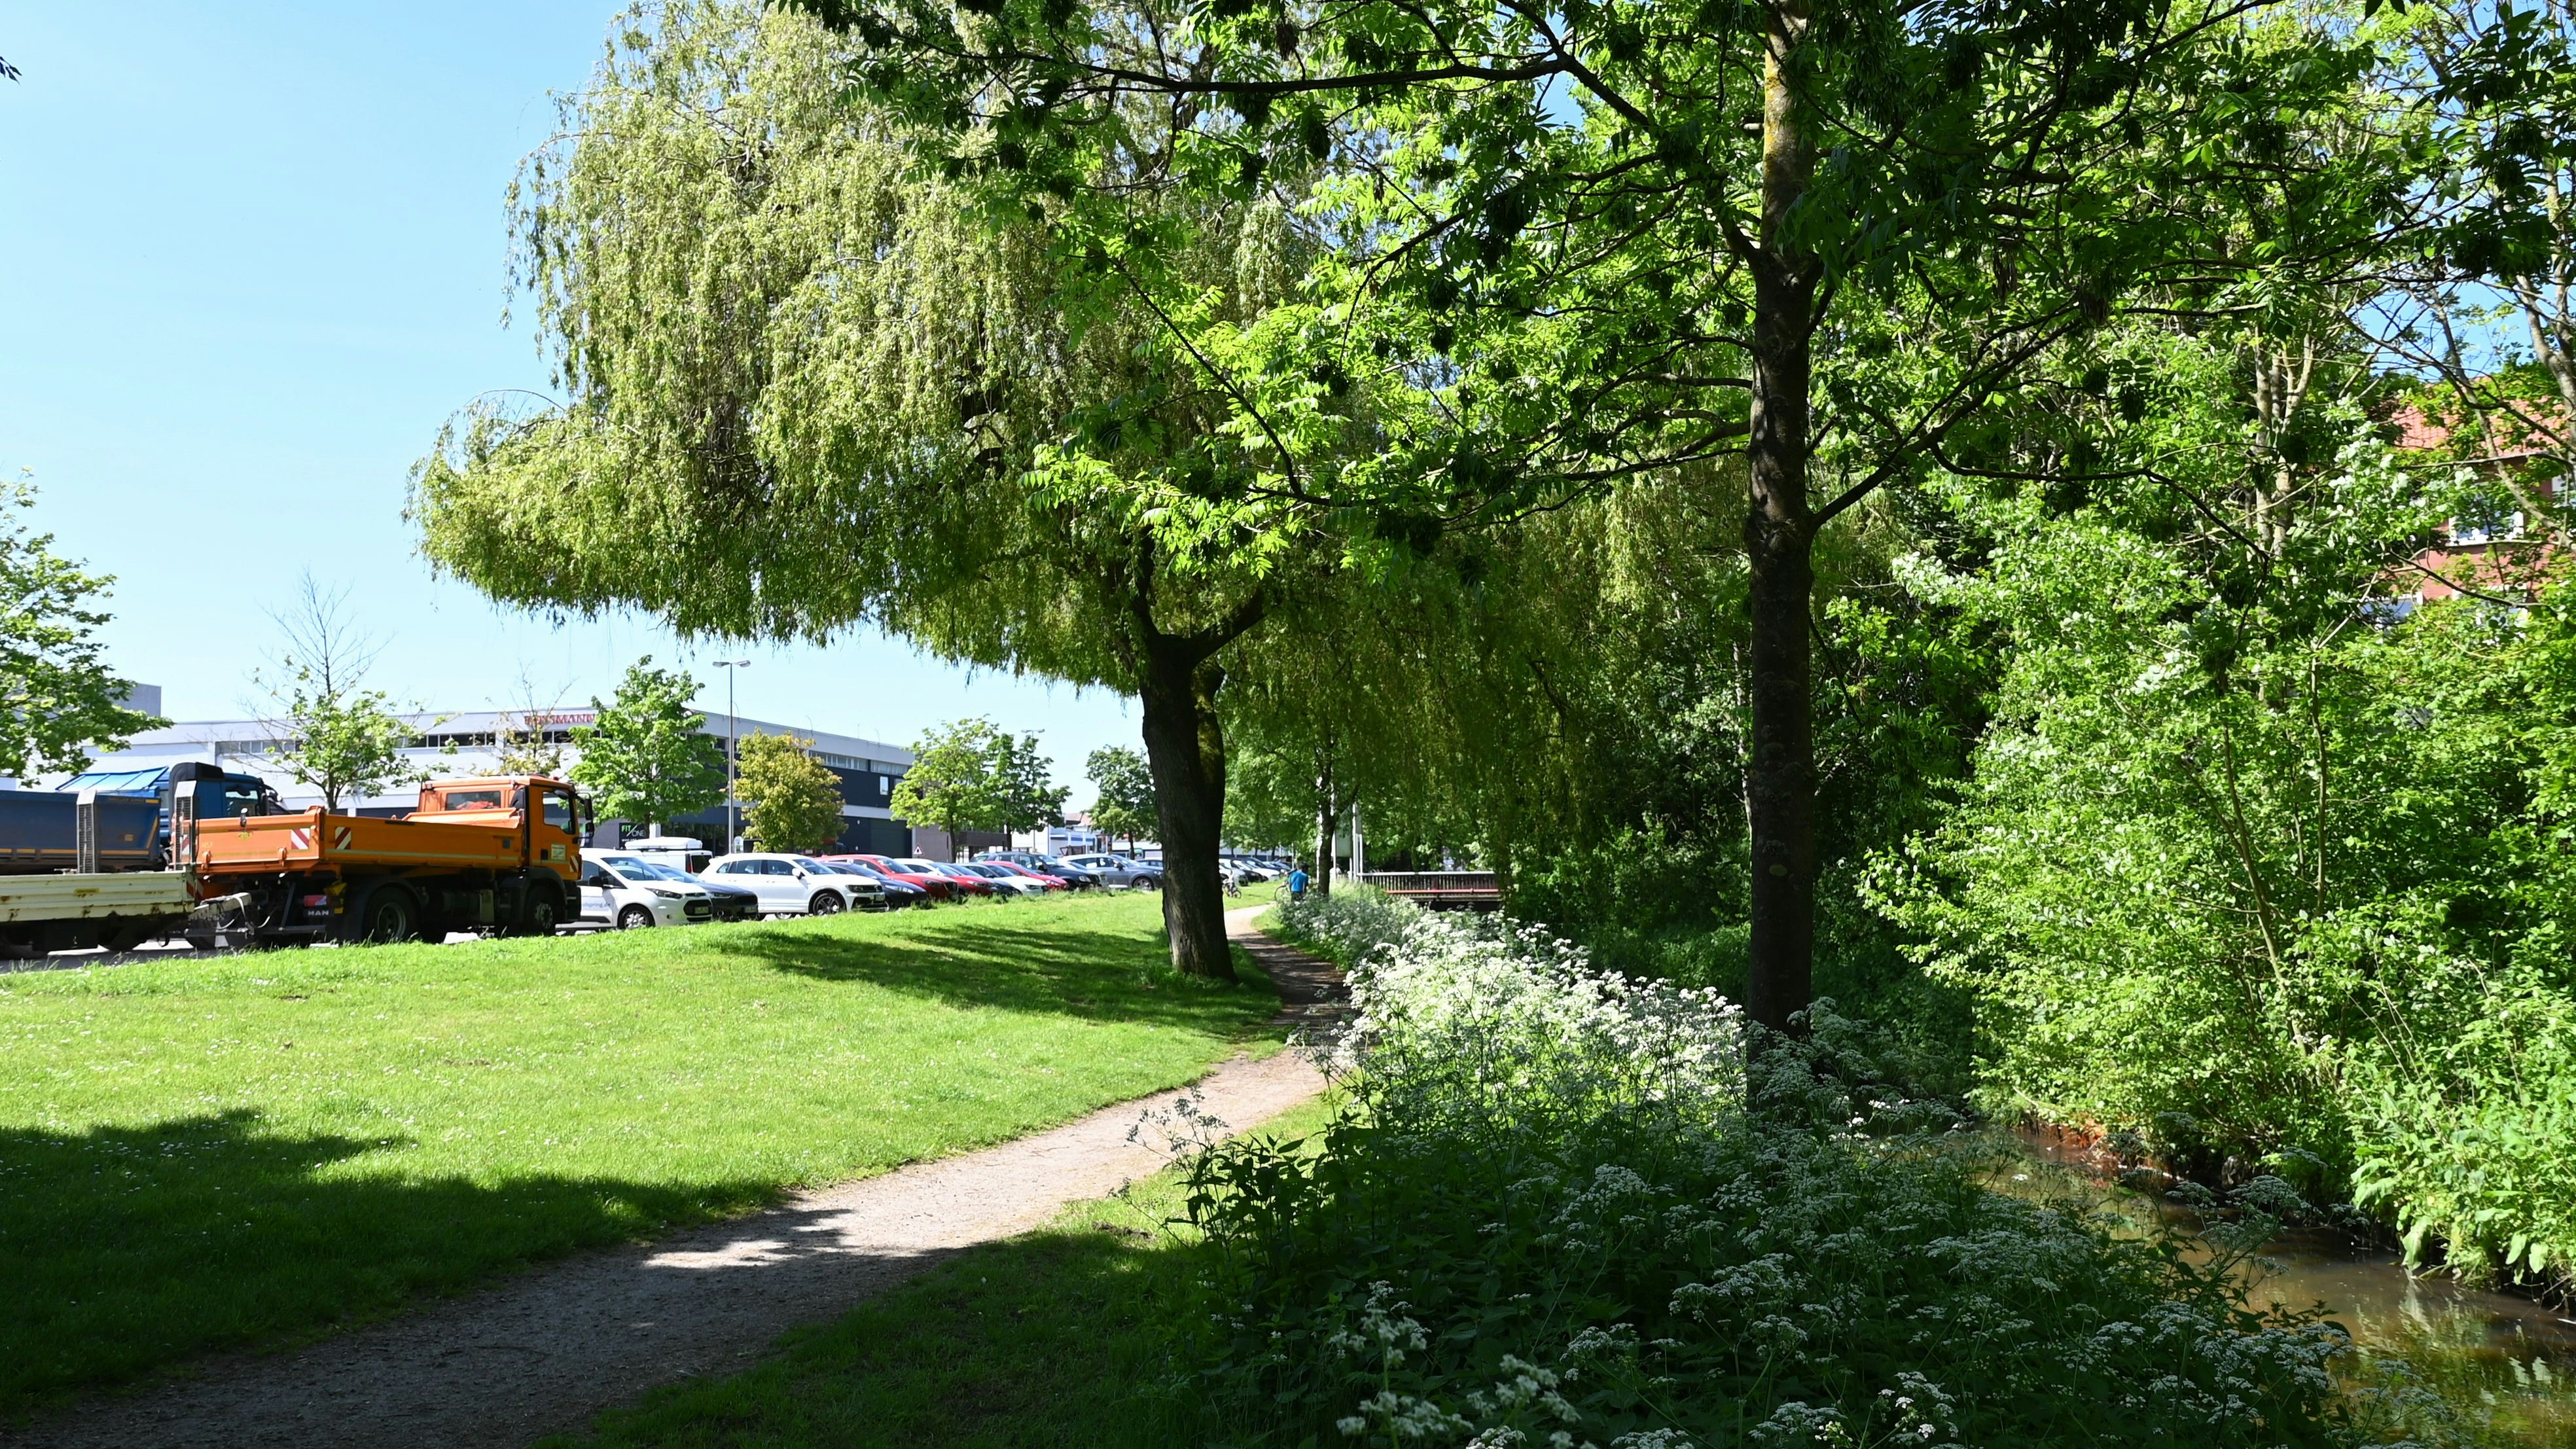 Soll grüner werden: Das Areal entlang der Soeste am Rande des Parkplatzes an der Bürgermeister-Heukamp-Straße. Archivfoto: Hermes